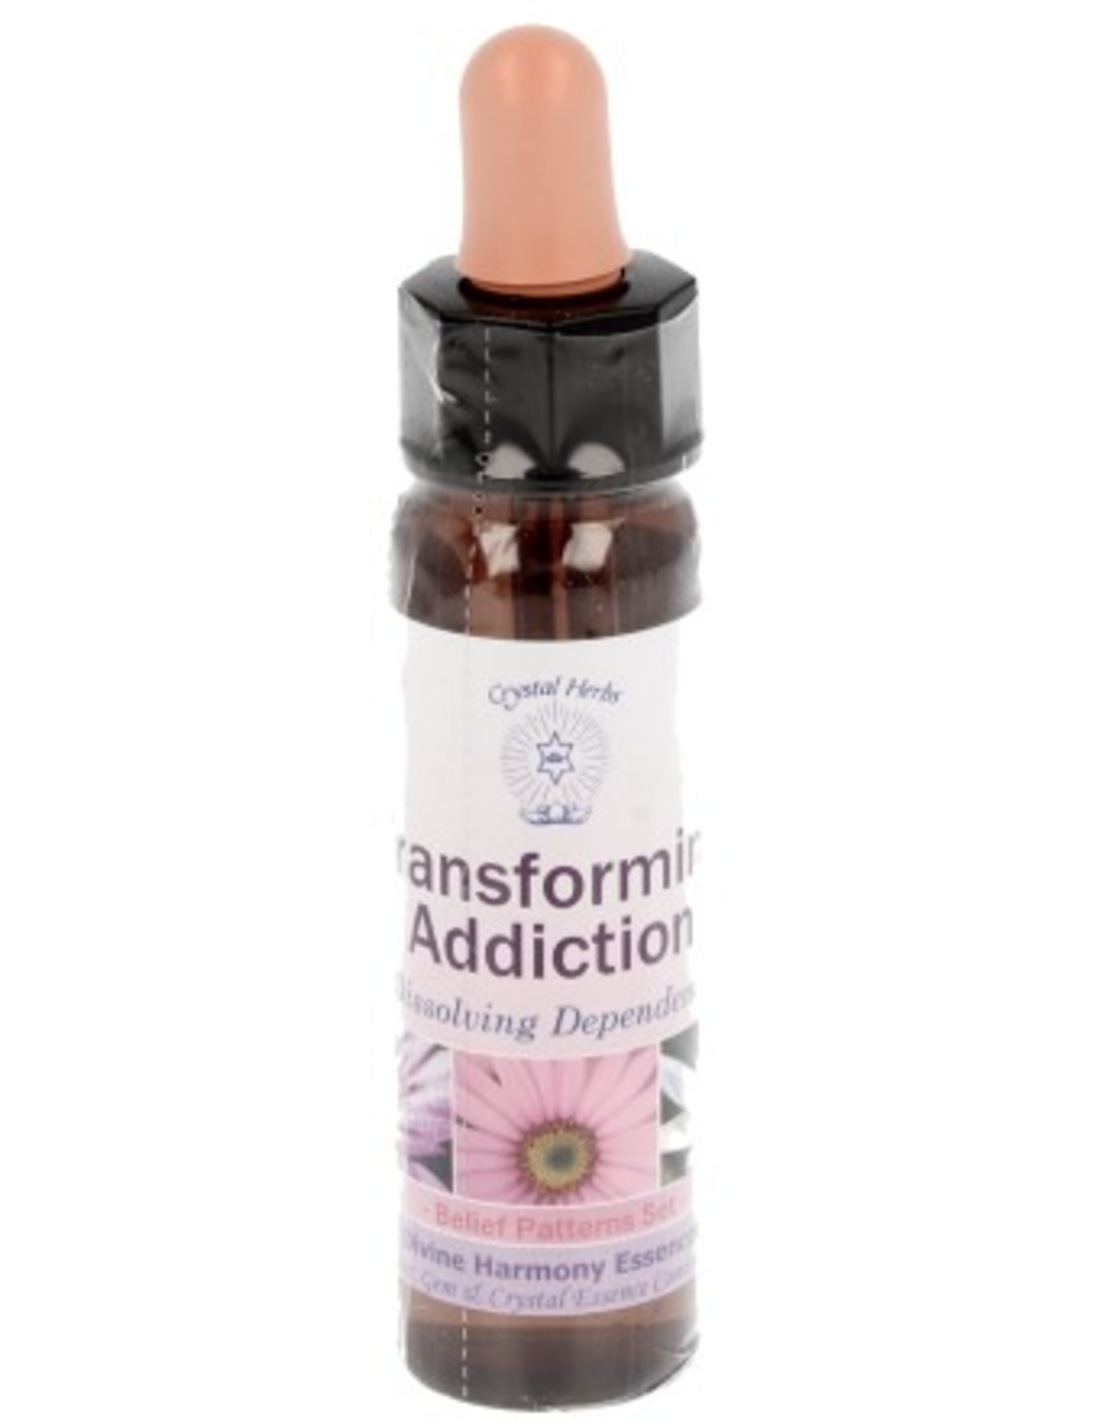 10 ml Transforming Addiction - uit Belief Patterns Essences